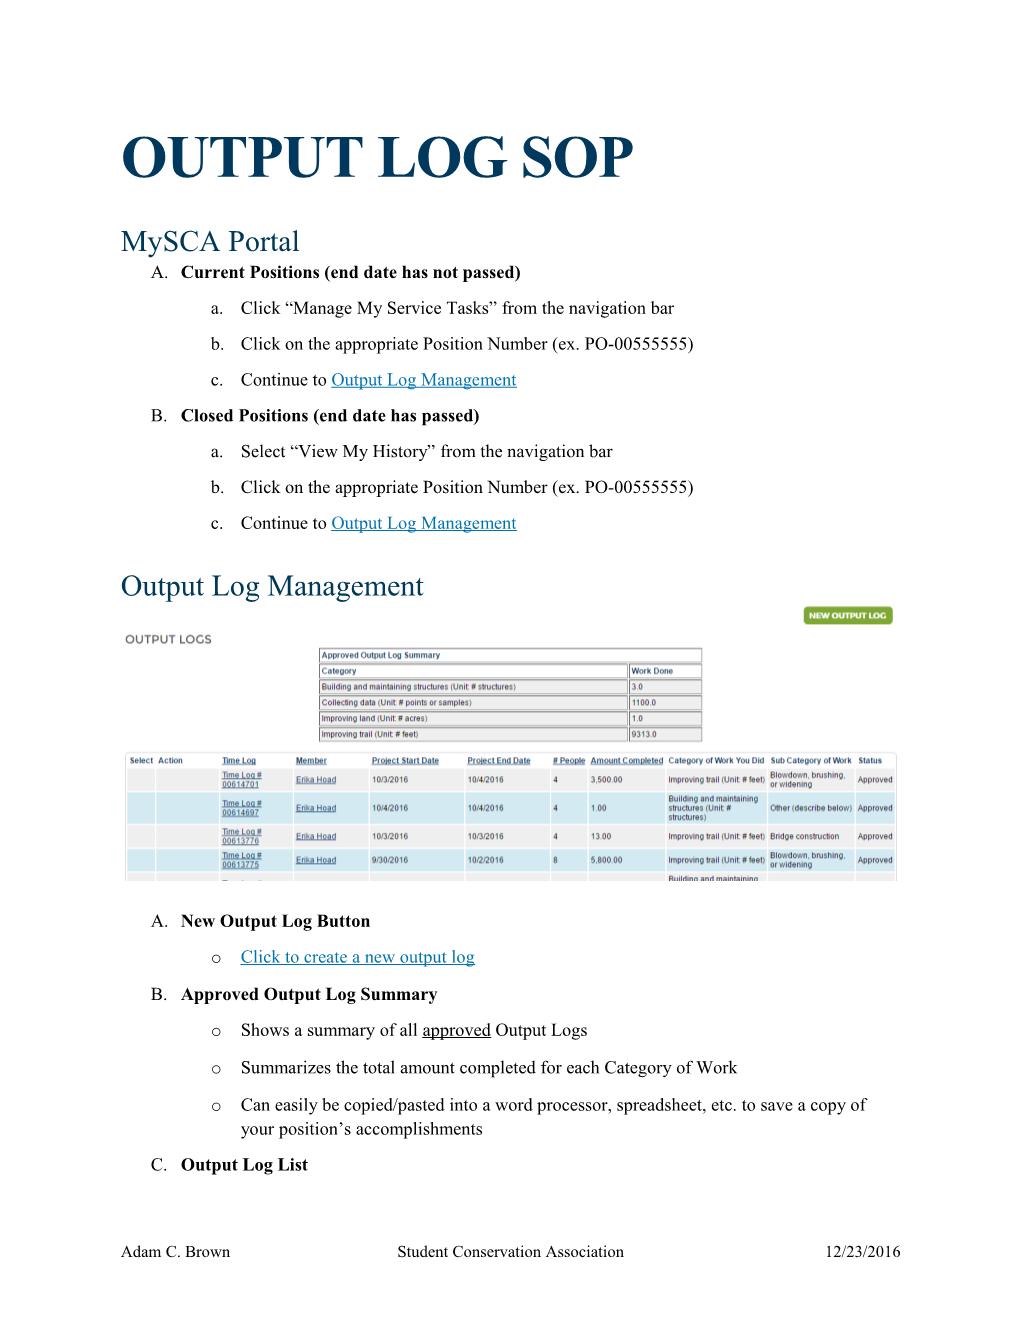 Output Log SOP